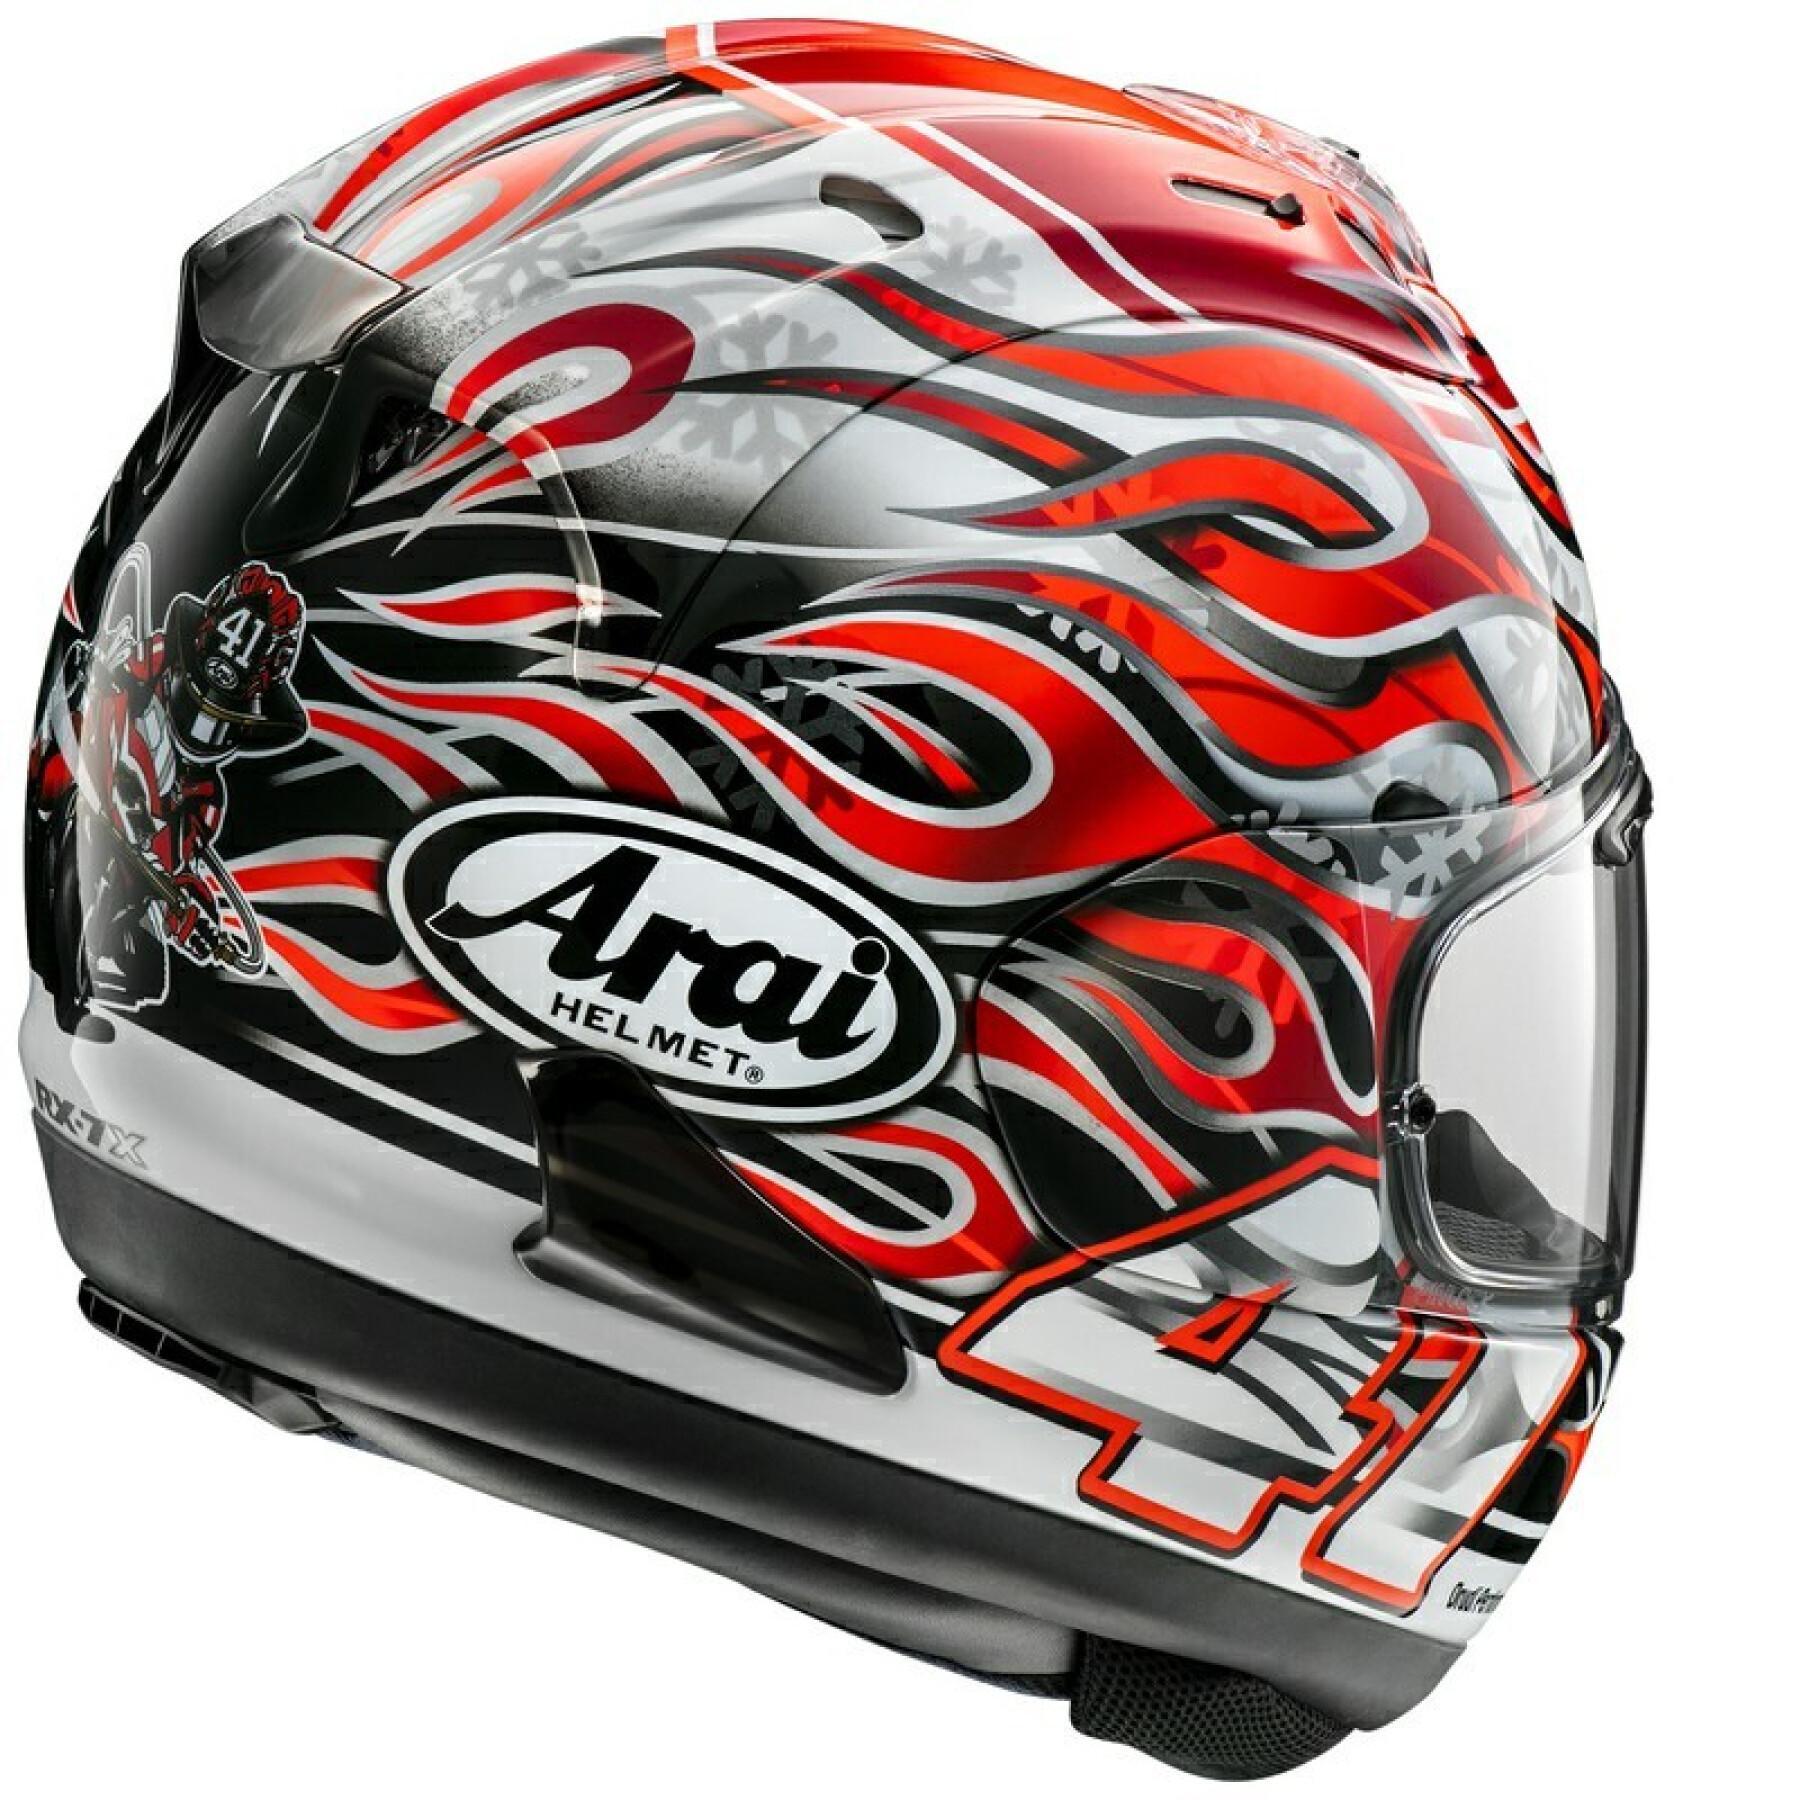 Full face motorcycle helmet Arai RX-7V Evo Haga Replica